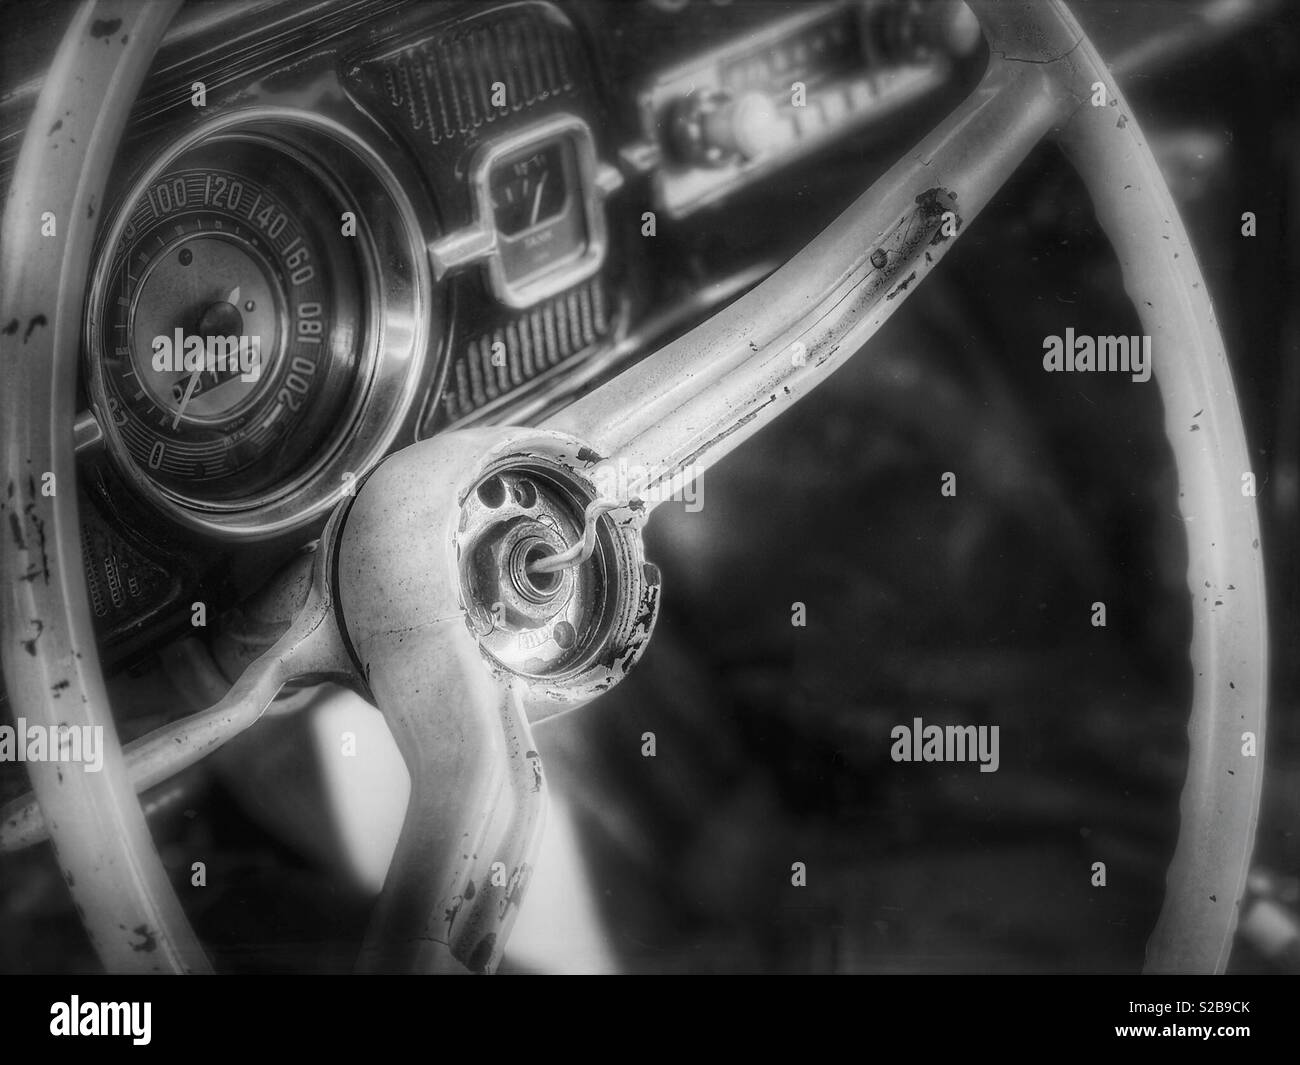 Vintage VW Beetle steering wheel and dash Stock Photo